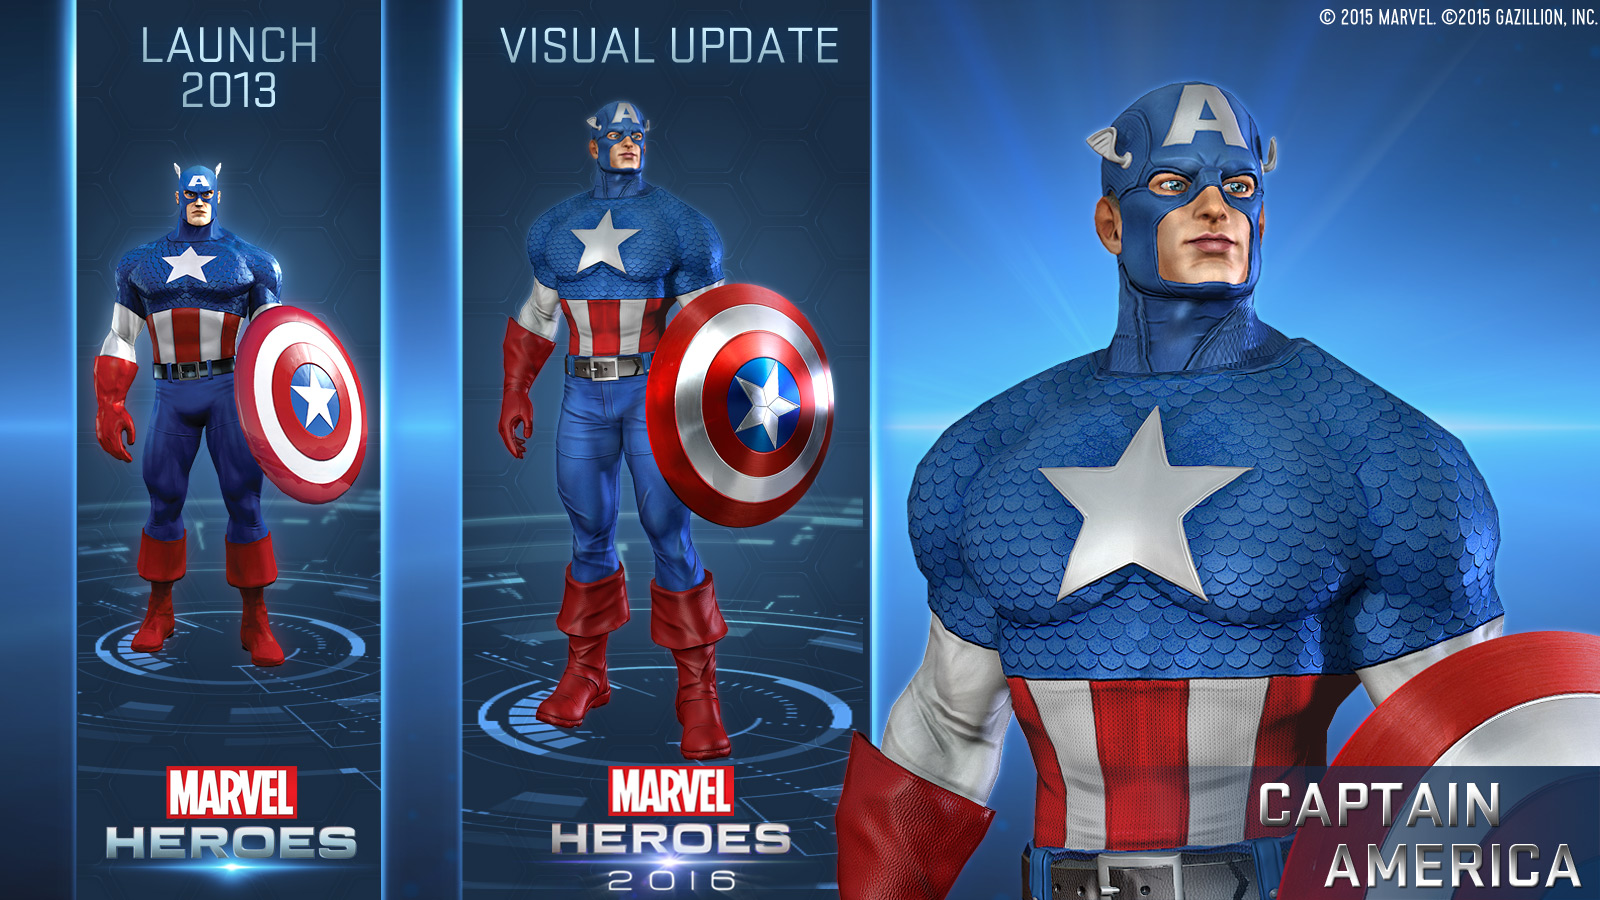 VisualUpdate CaptainAmerica Marvel Heroes 2016 Kicks Off Today